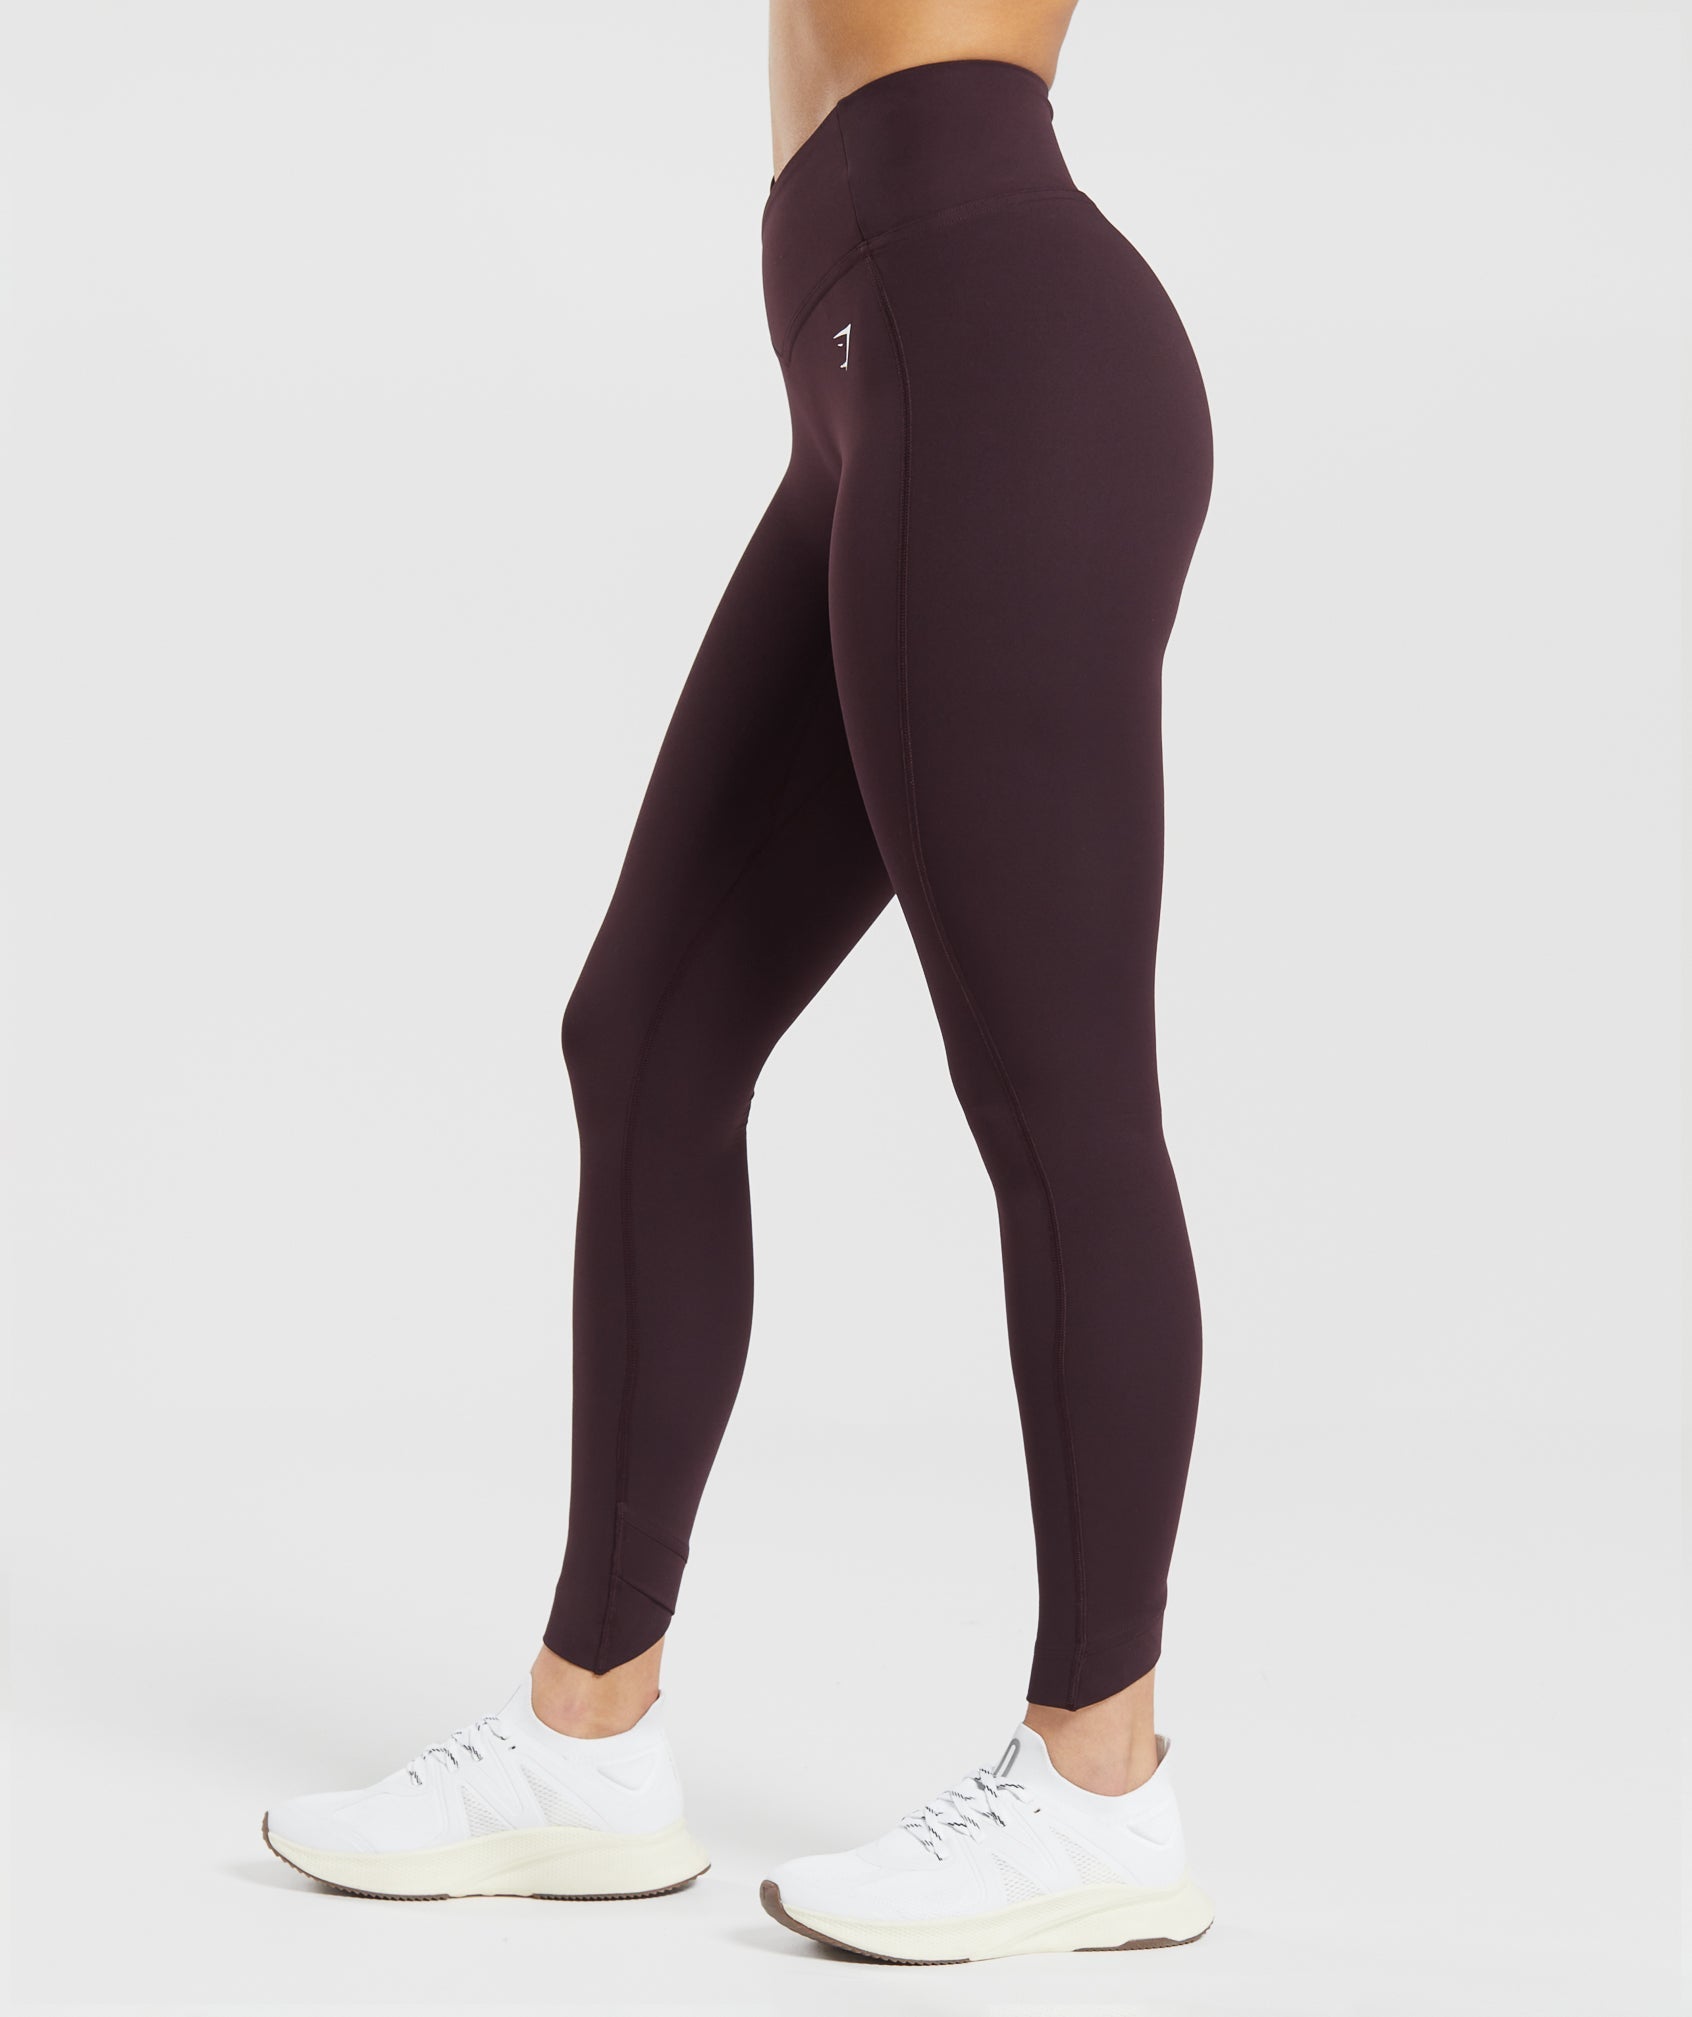 Womens Nike Yoga High-Rise 7/8 Cut Out Leggings XL Purple Plum Fog Gym